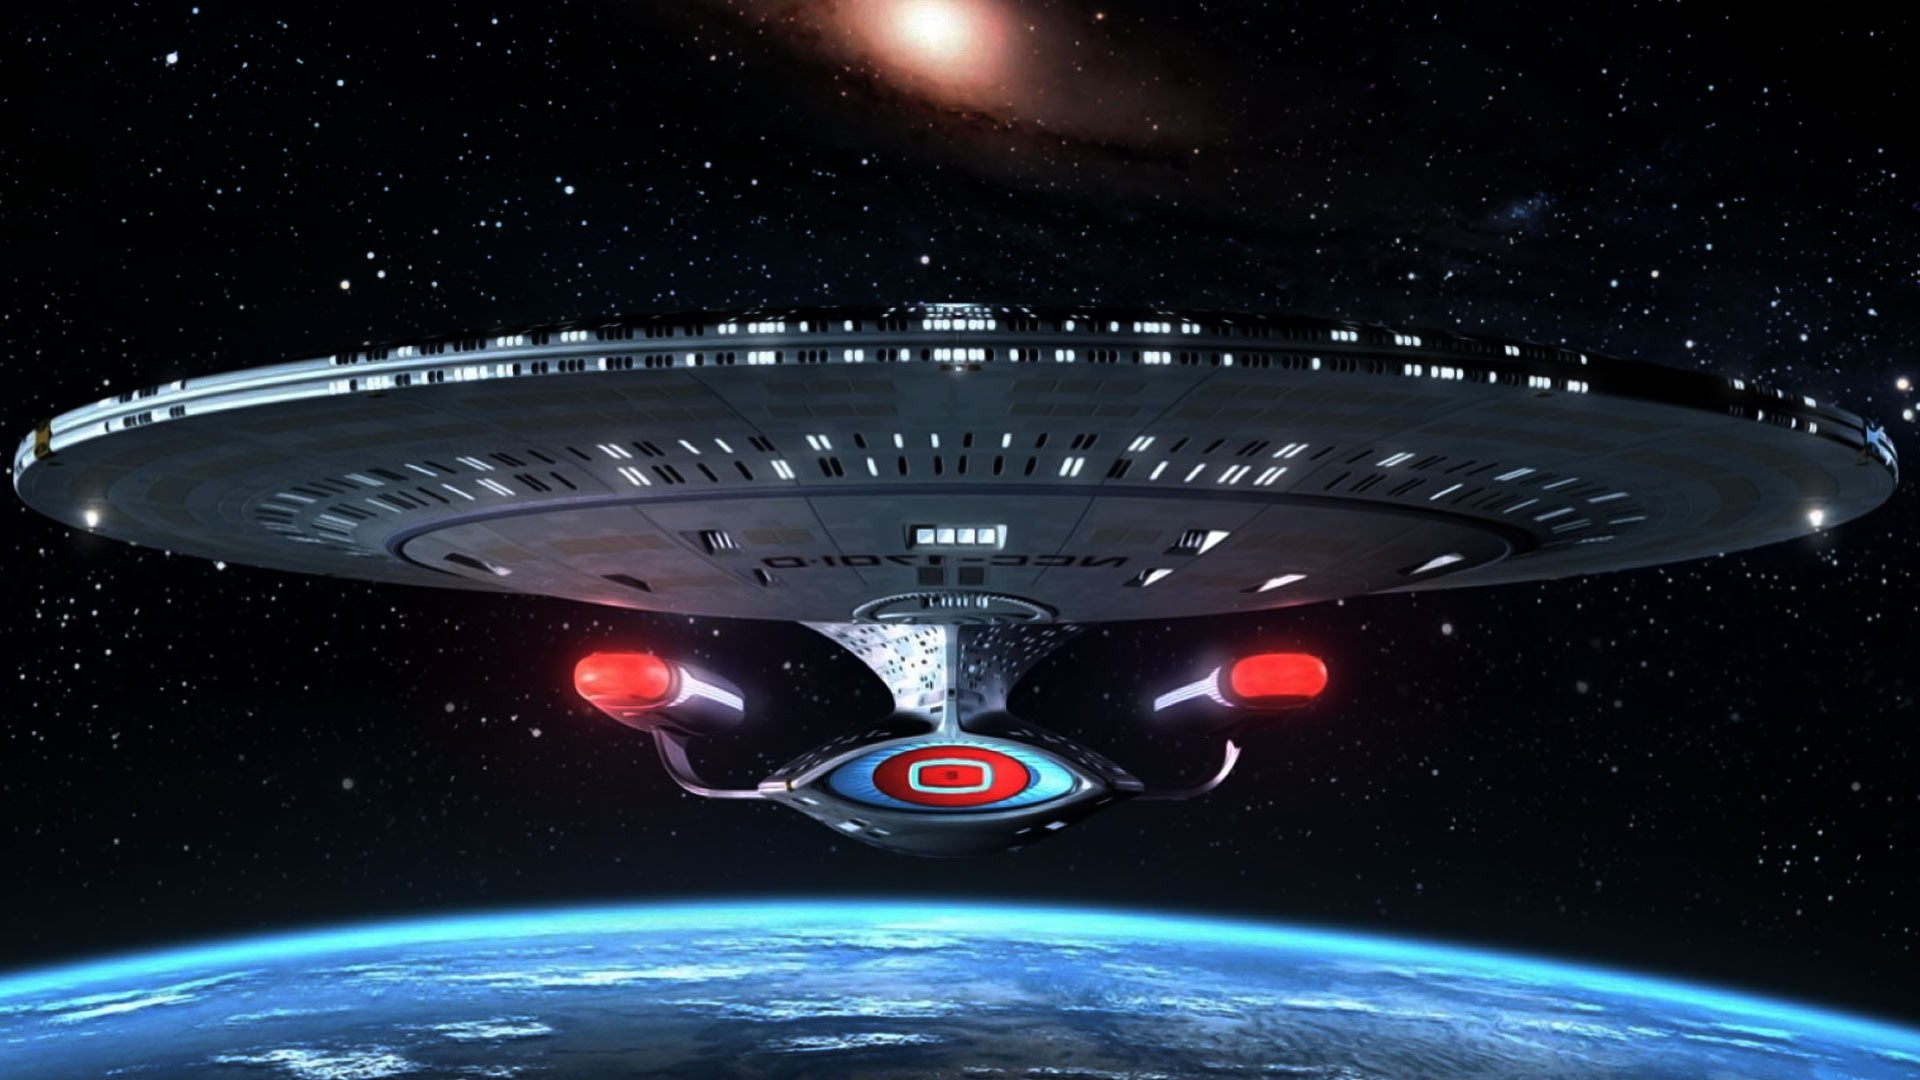 Starship Enterprise Bridge Star Trek Zoom Background Photos The 20 Images